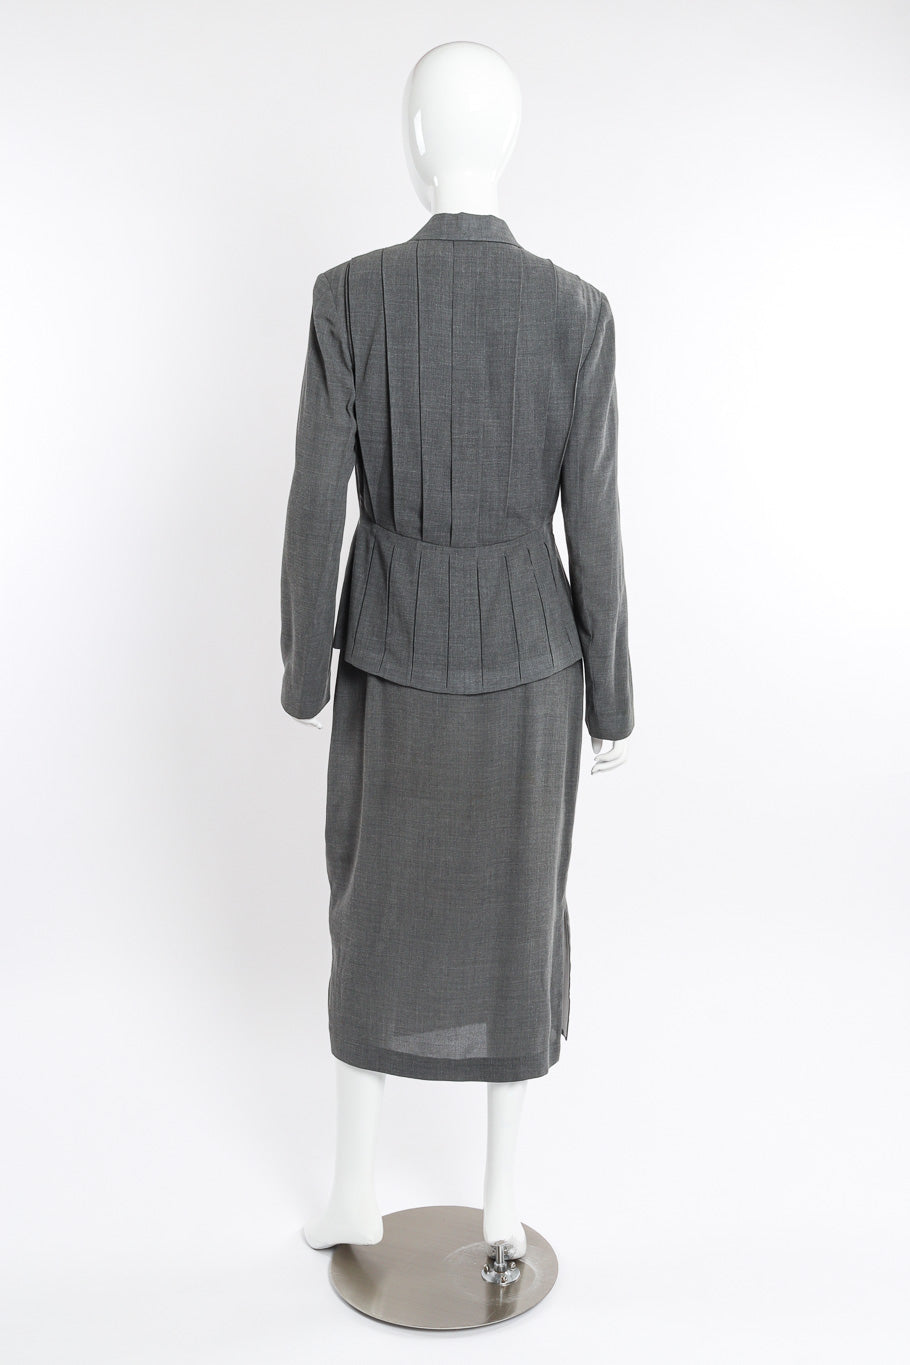 Vintage Richard Tyler Pleated Blazer and Dress Set back view on mannequin @recessla